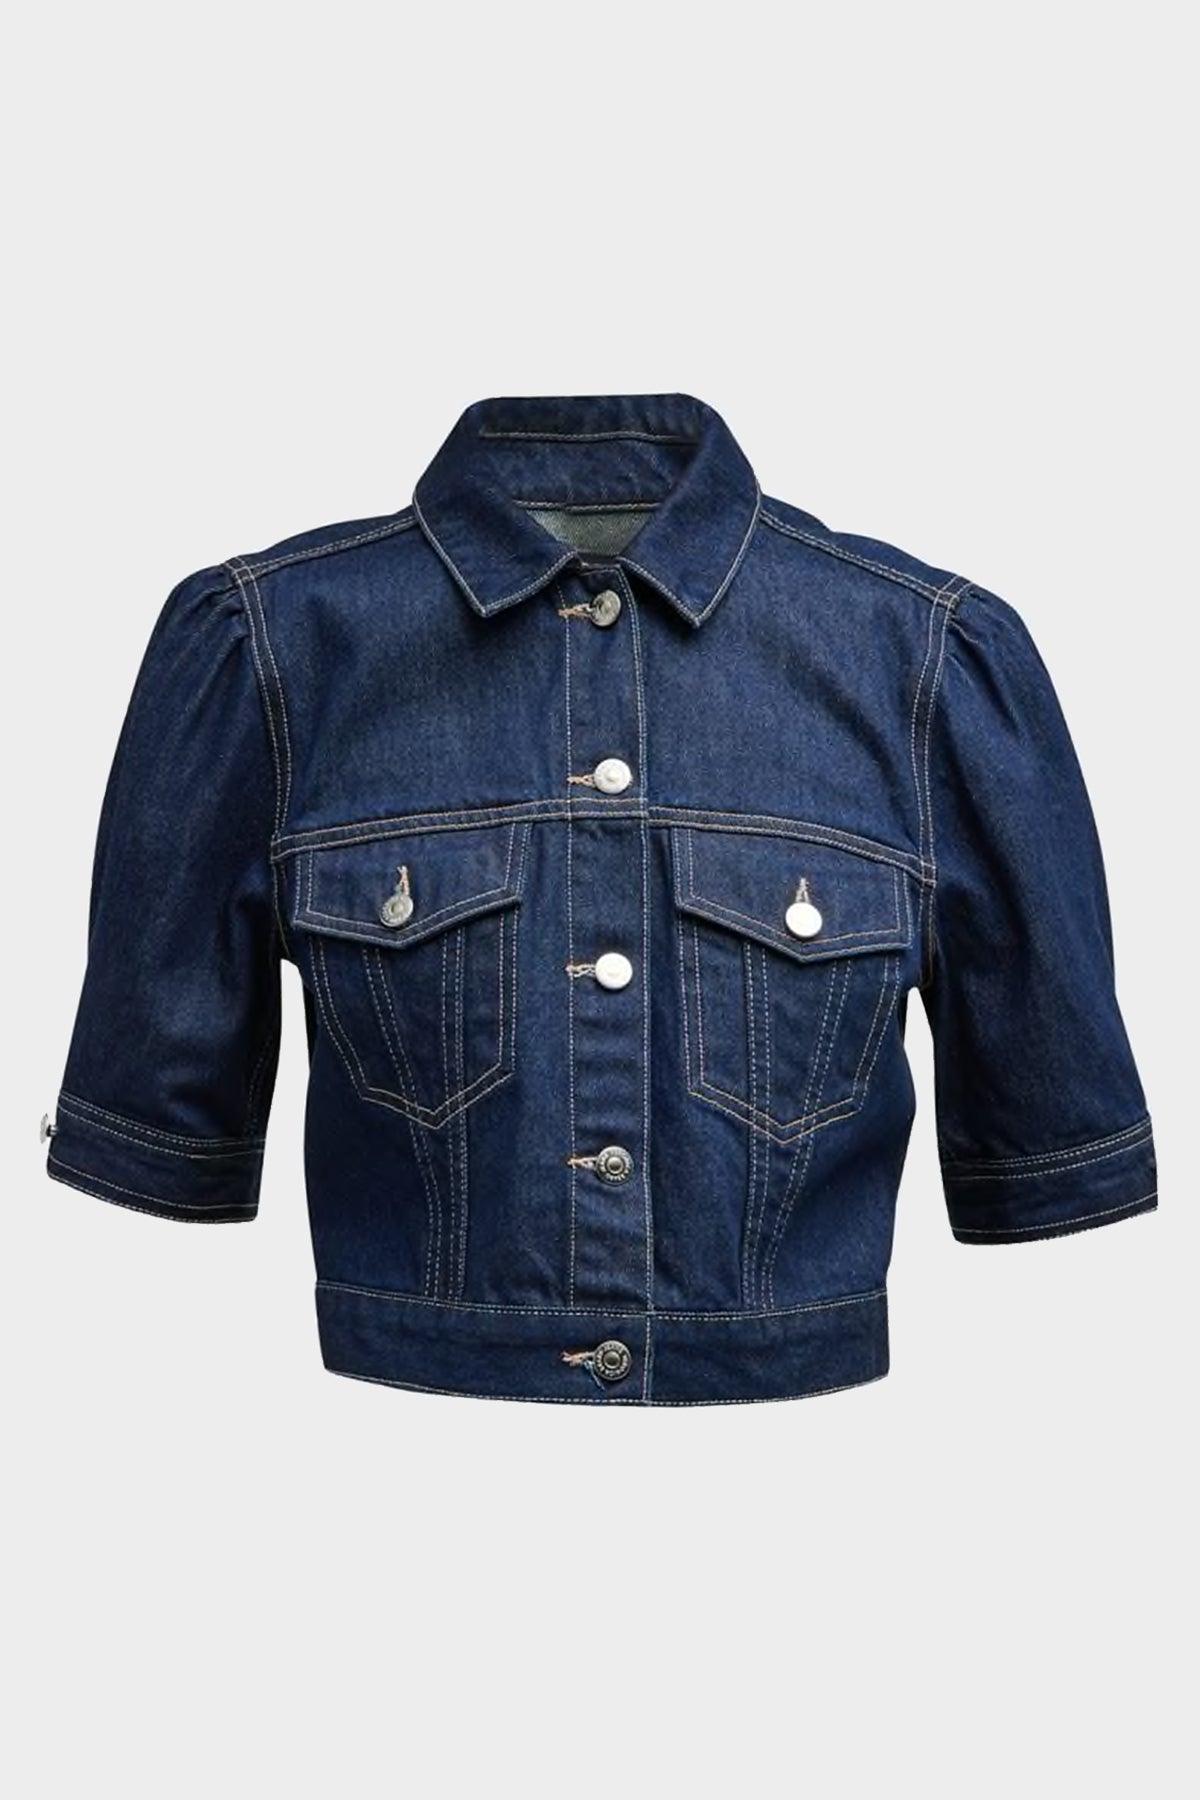 Raina Short-Sleeve Denim Jacket in Indigo - shop-olivia.com